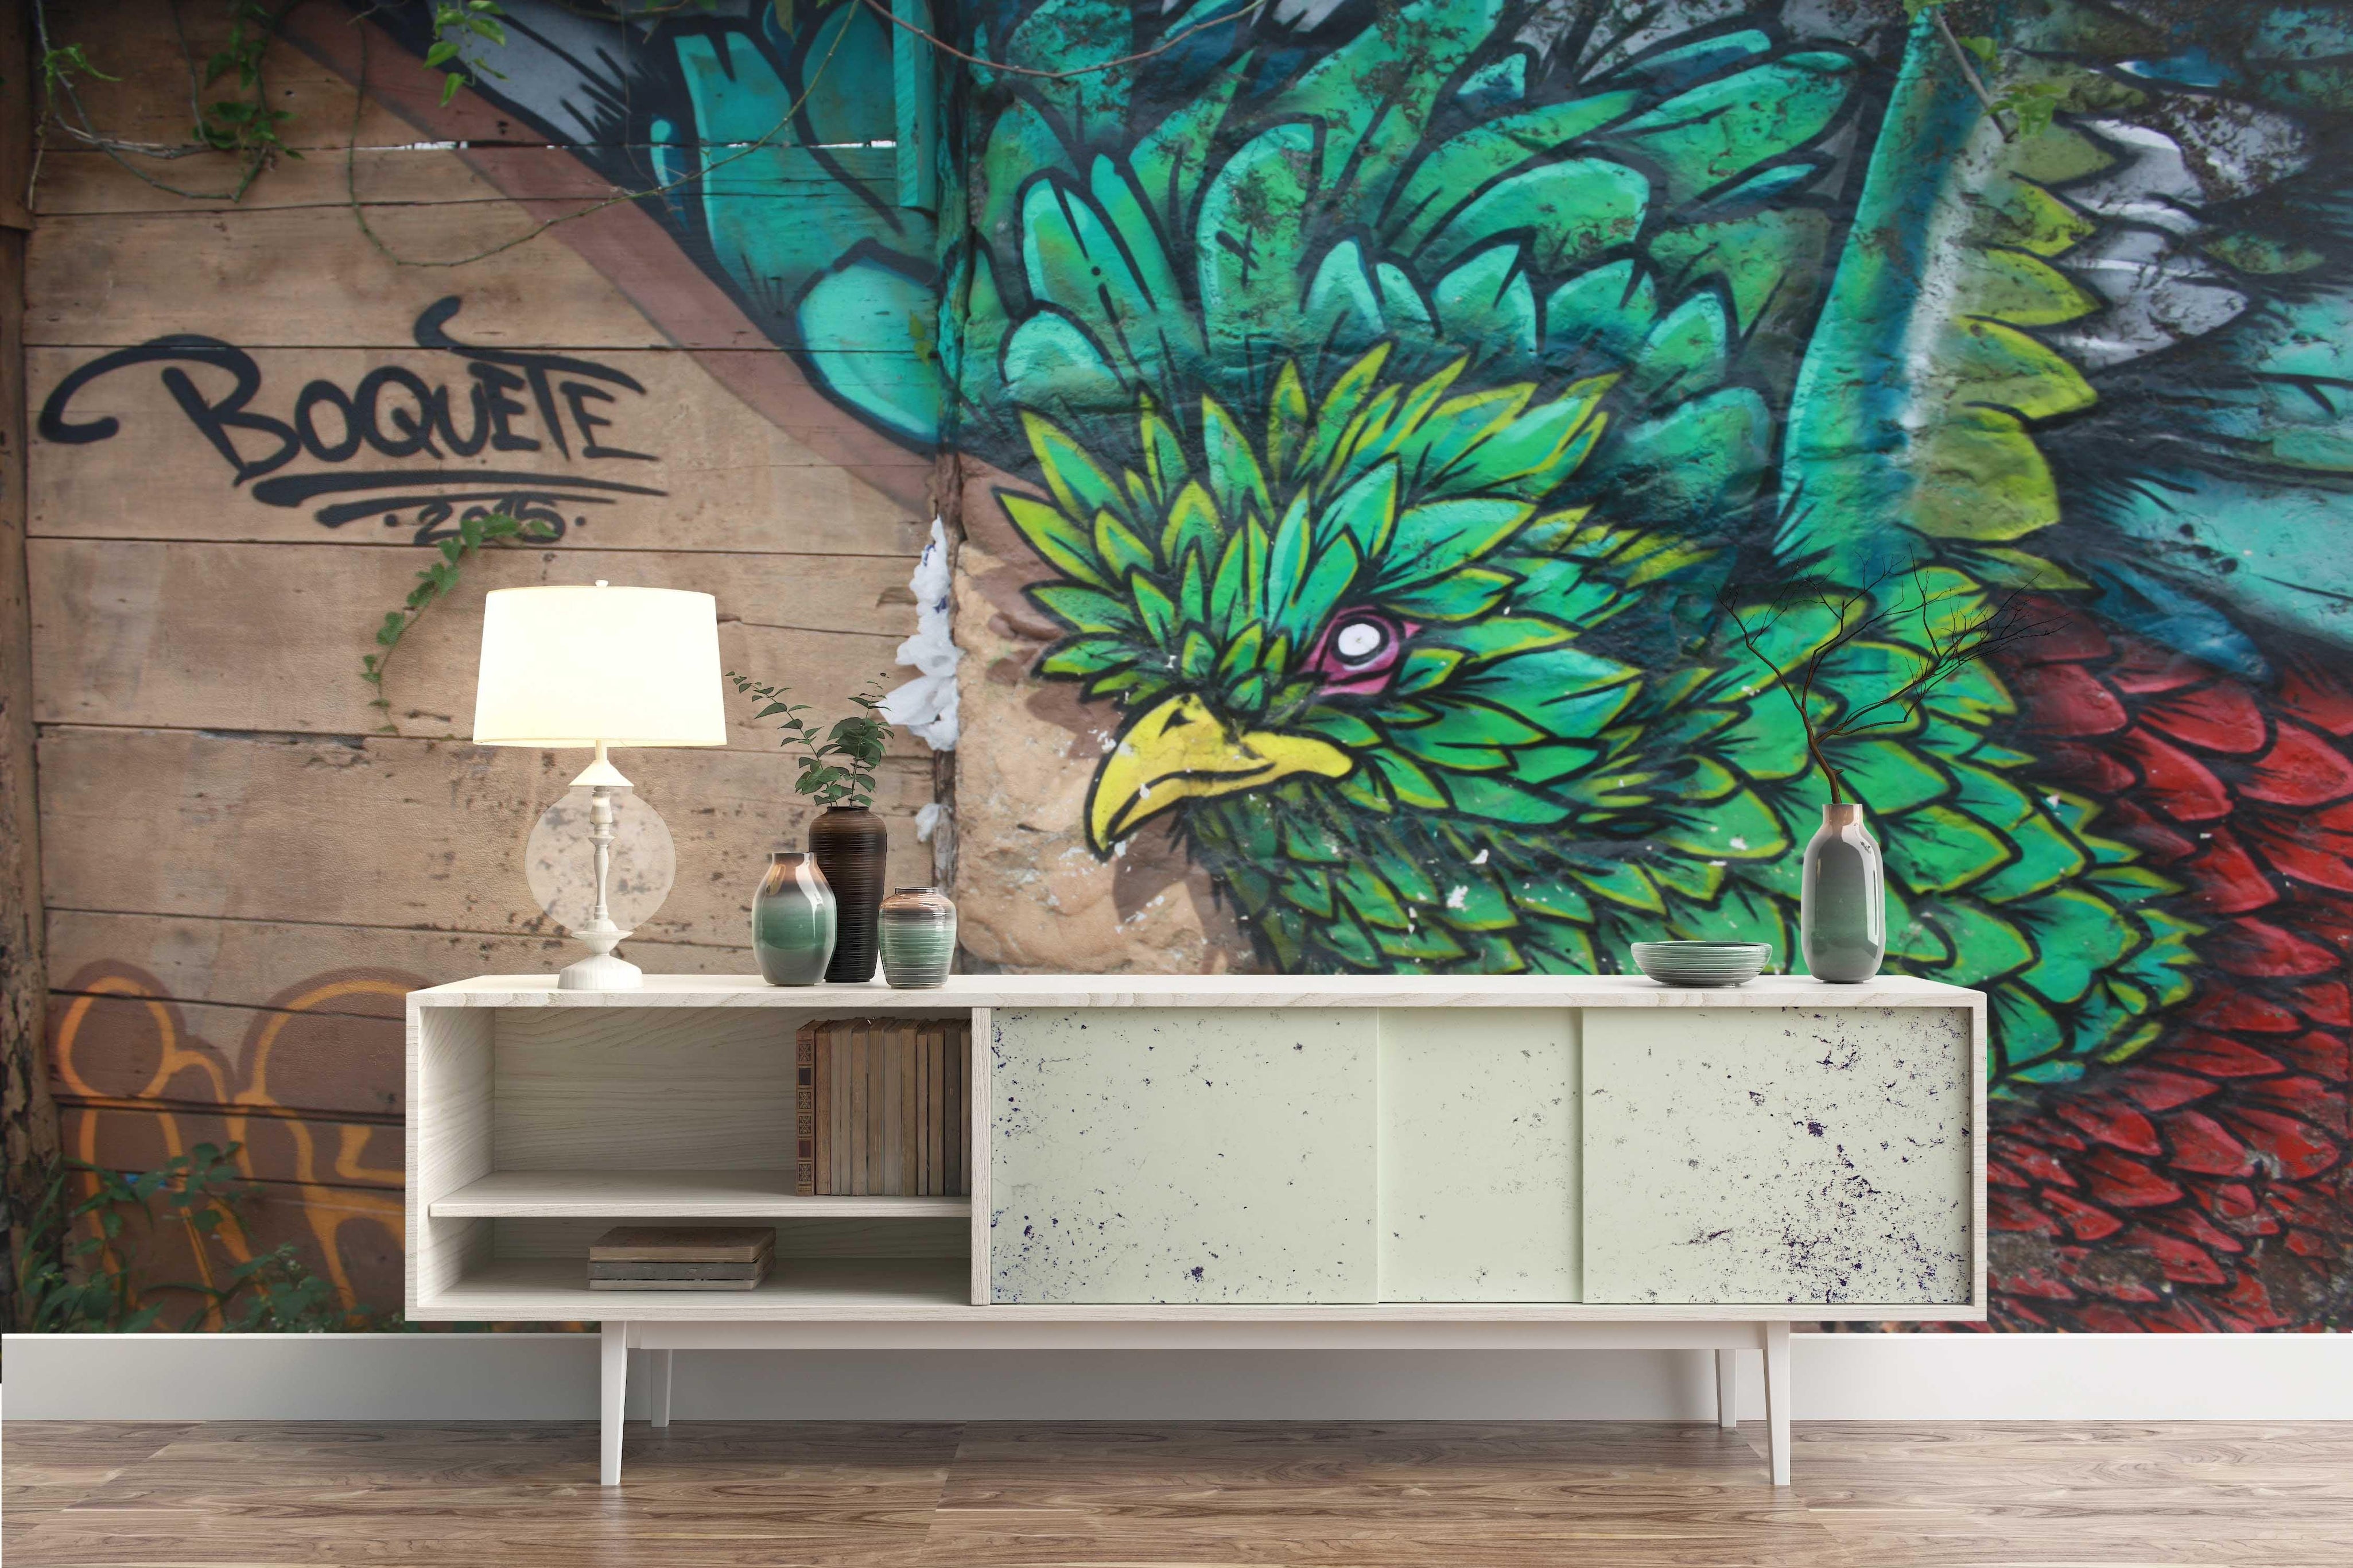 3D Abstract Green Eagle Wooden Graffiti Wall Mural Wallpaper 80- Jess Art Decoration